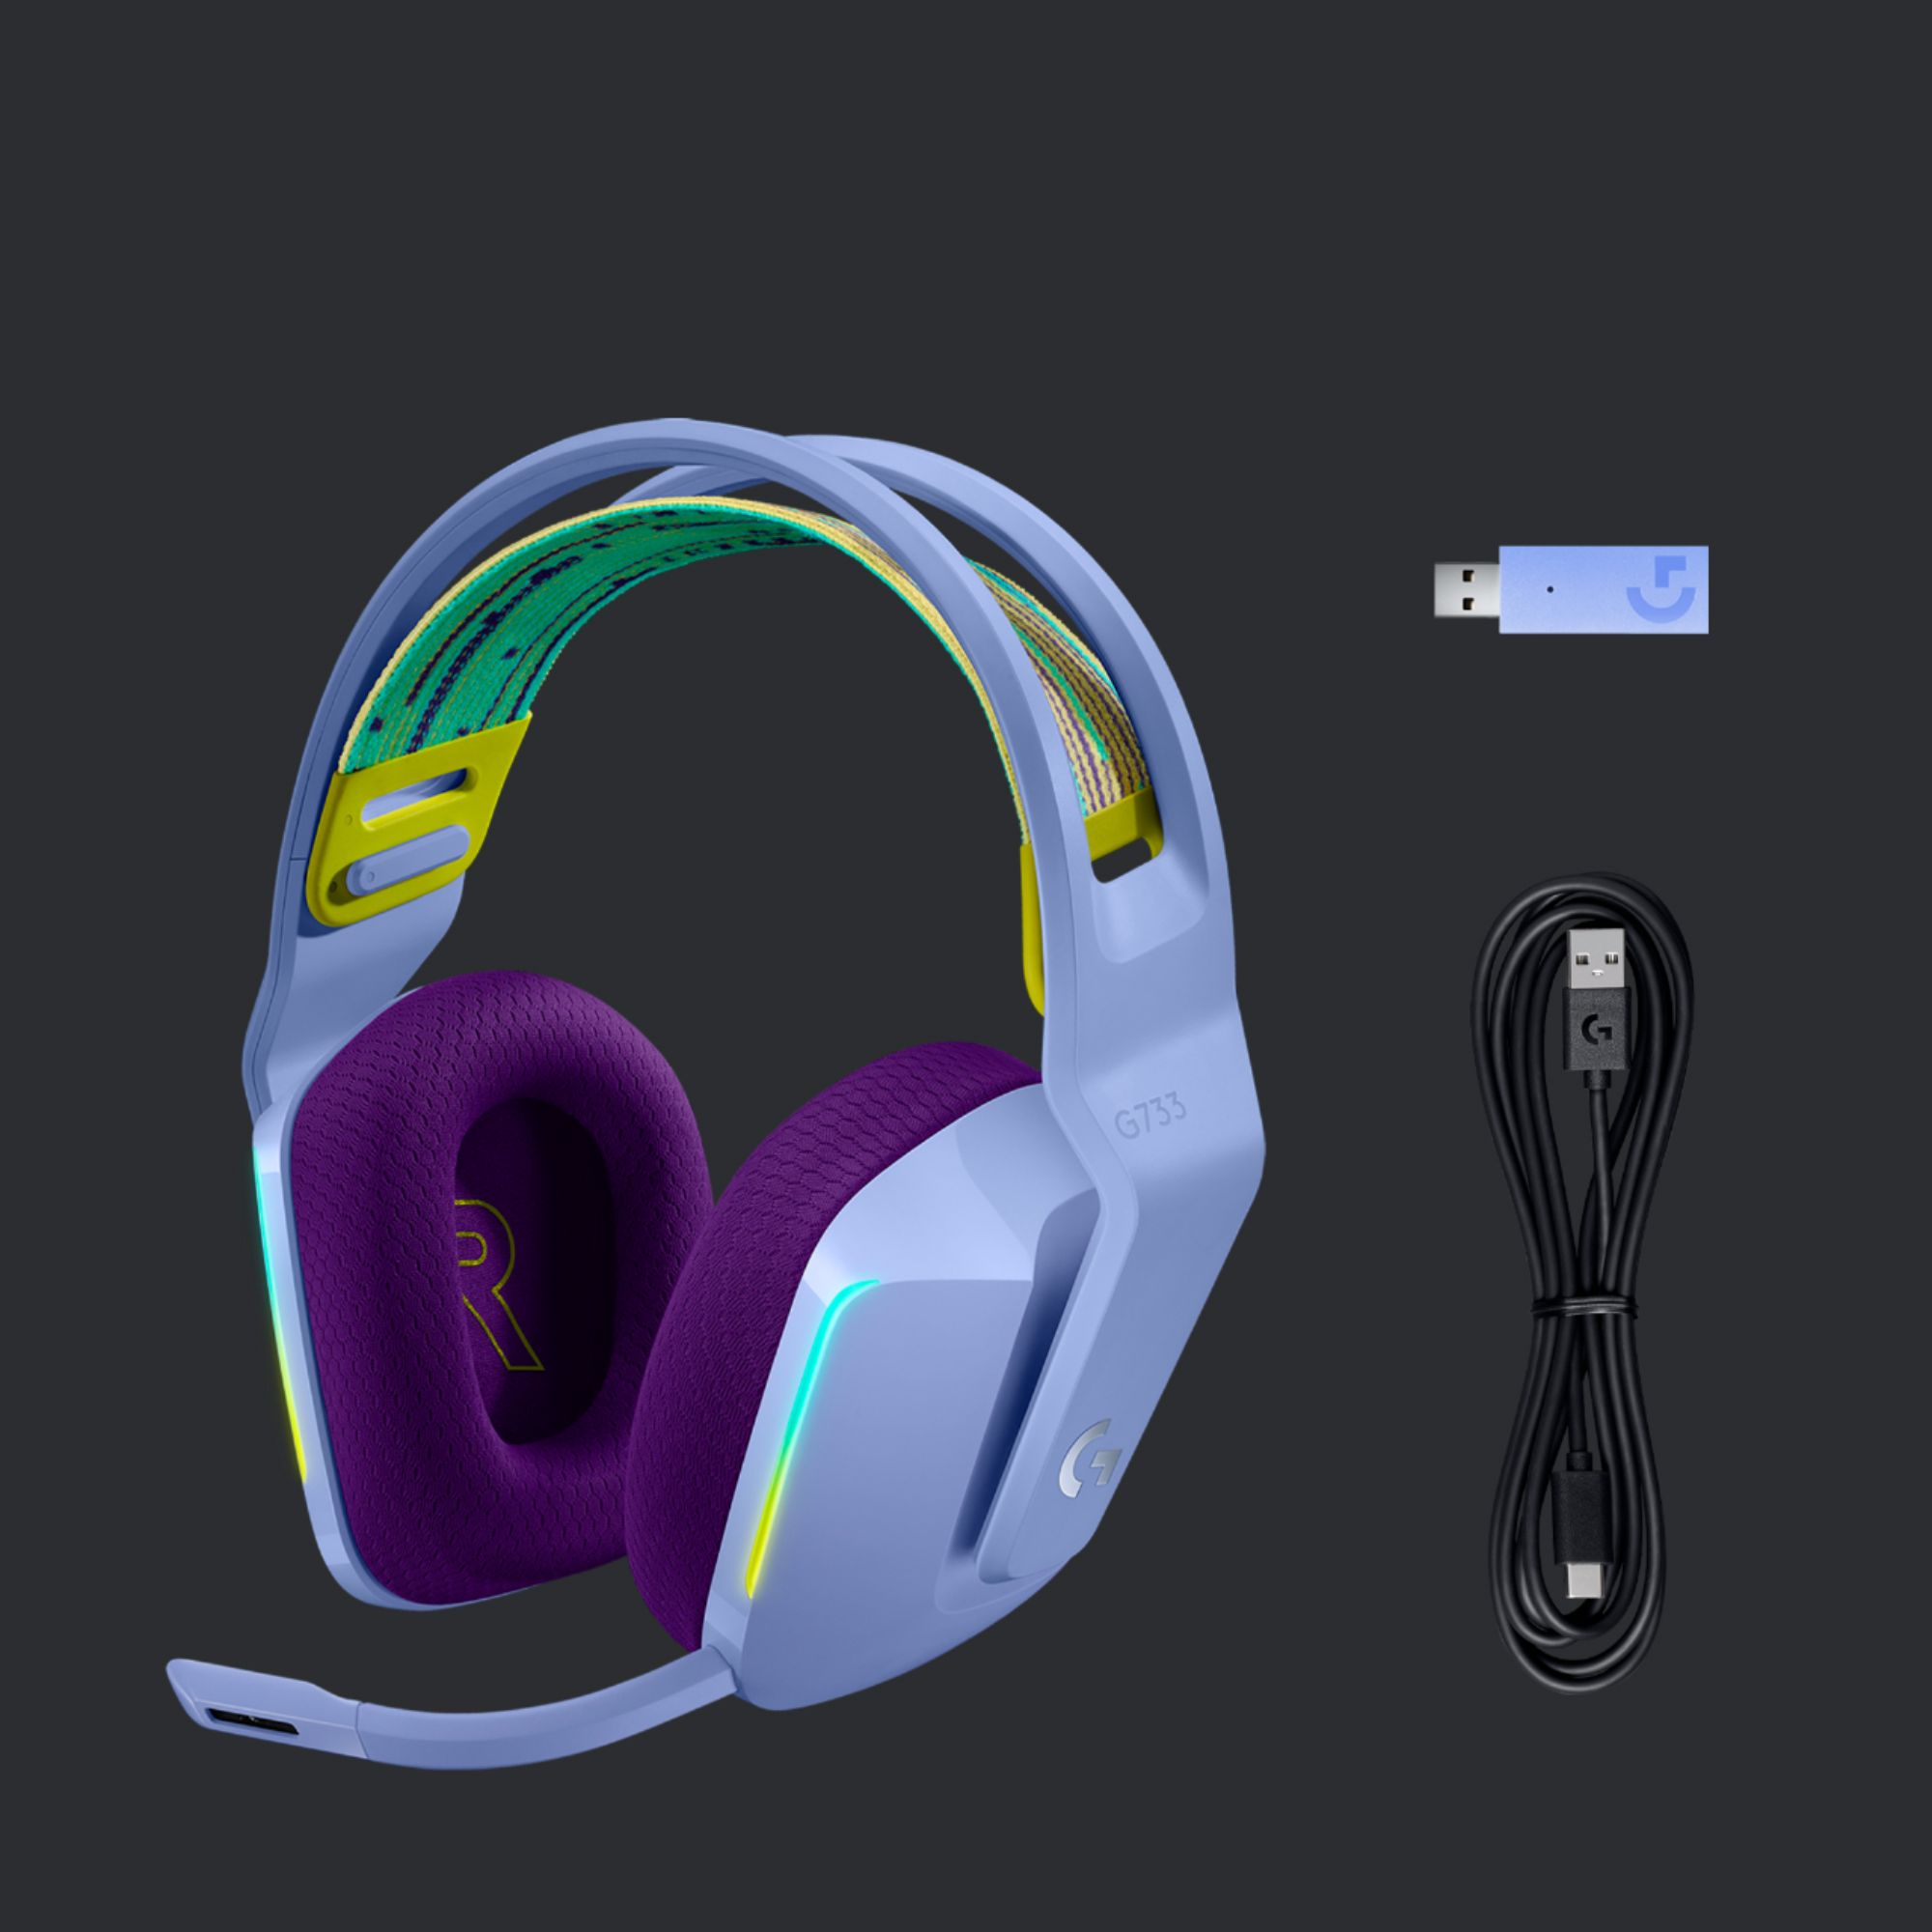 Logitech G733 Lightspeed Wireless Gaming Headset with Suspension Headband,  LIGHTSYNC RGB, Blue VO!CE mic Technology and PRO-G Audio Drivers - White 